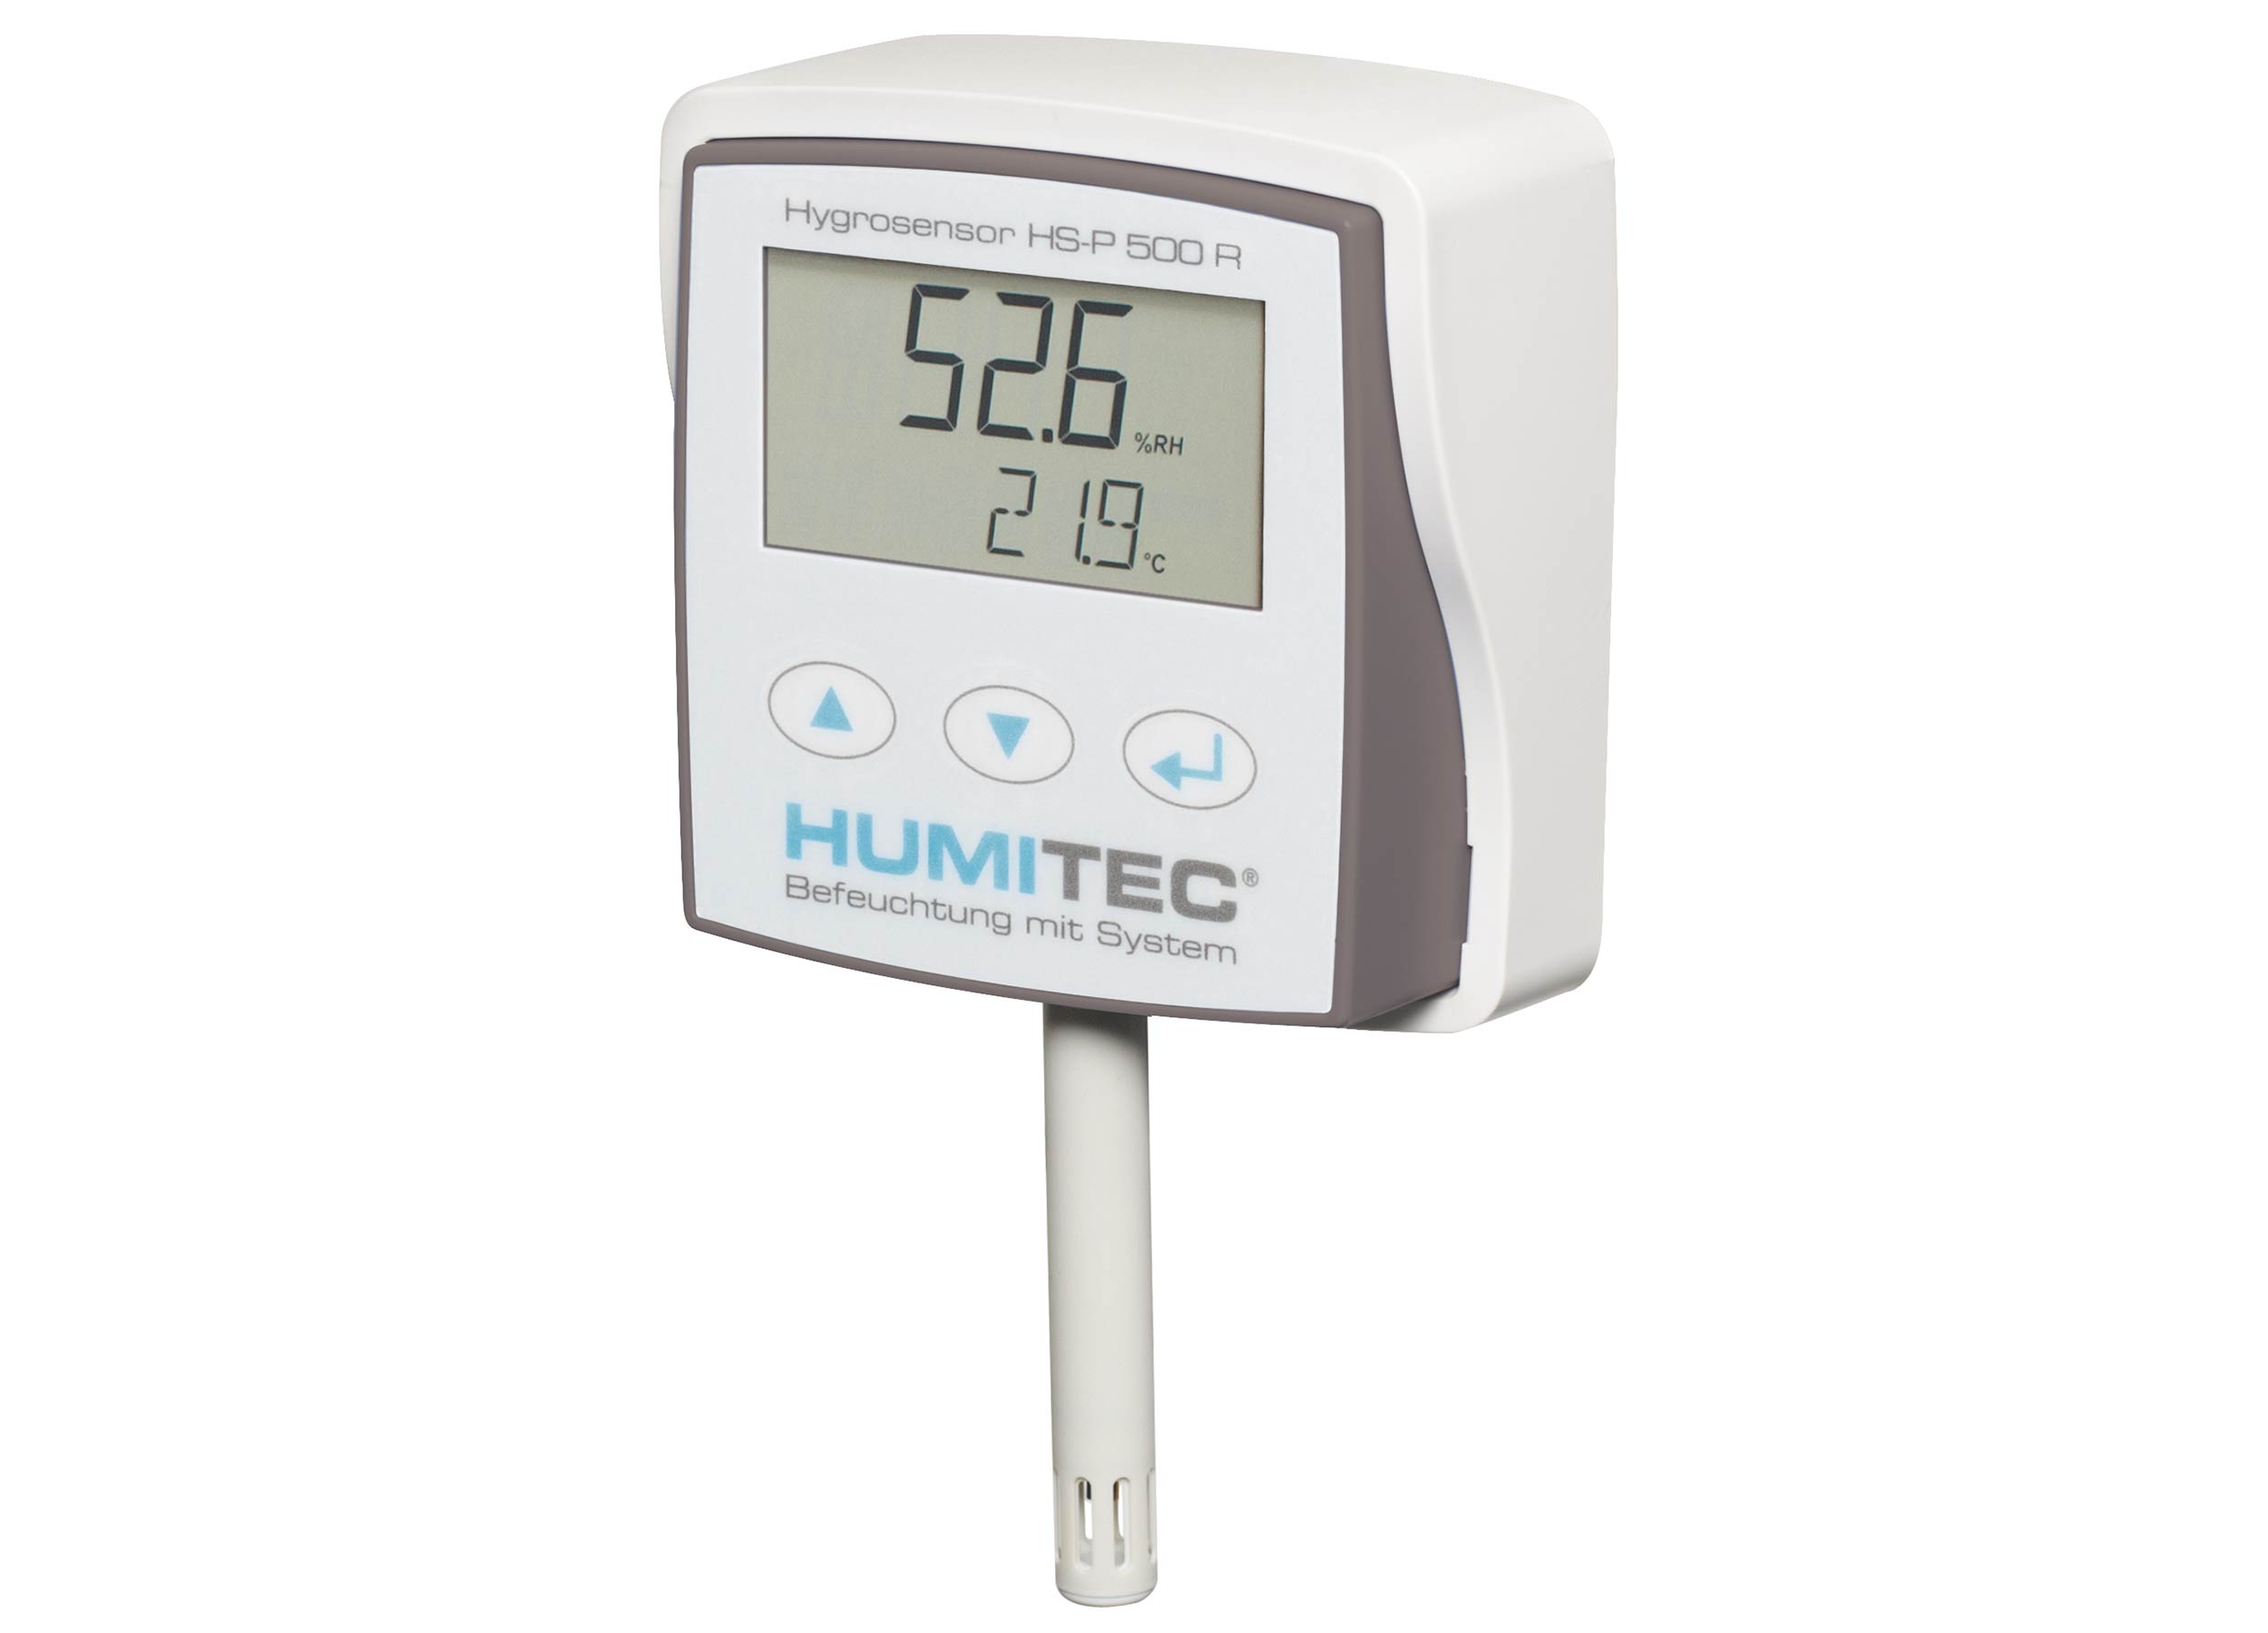 HUMITEC-Hygrosensor-HS-P-500-R